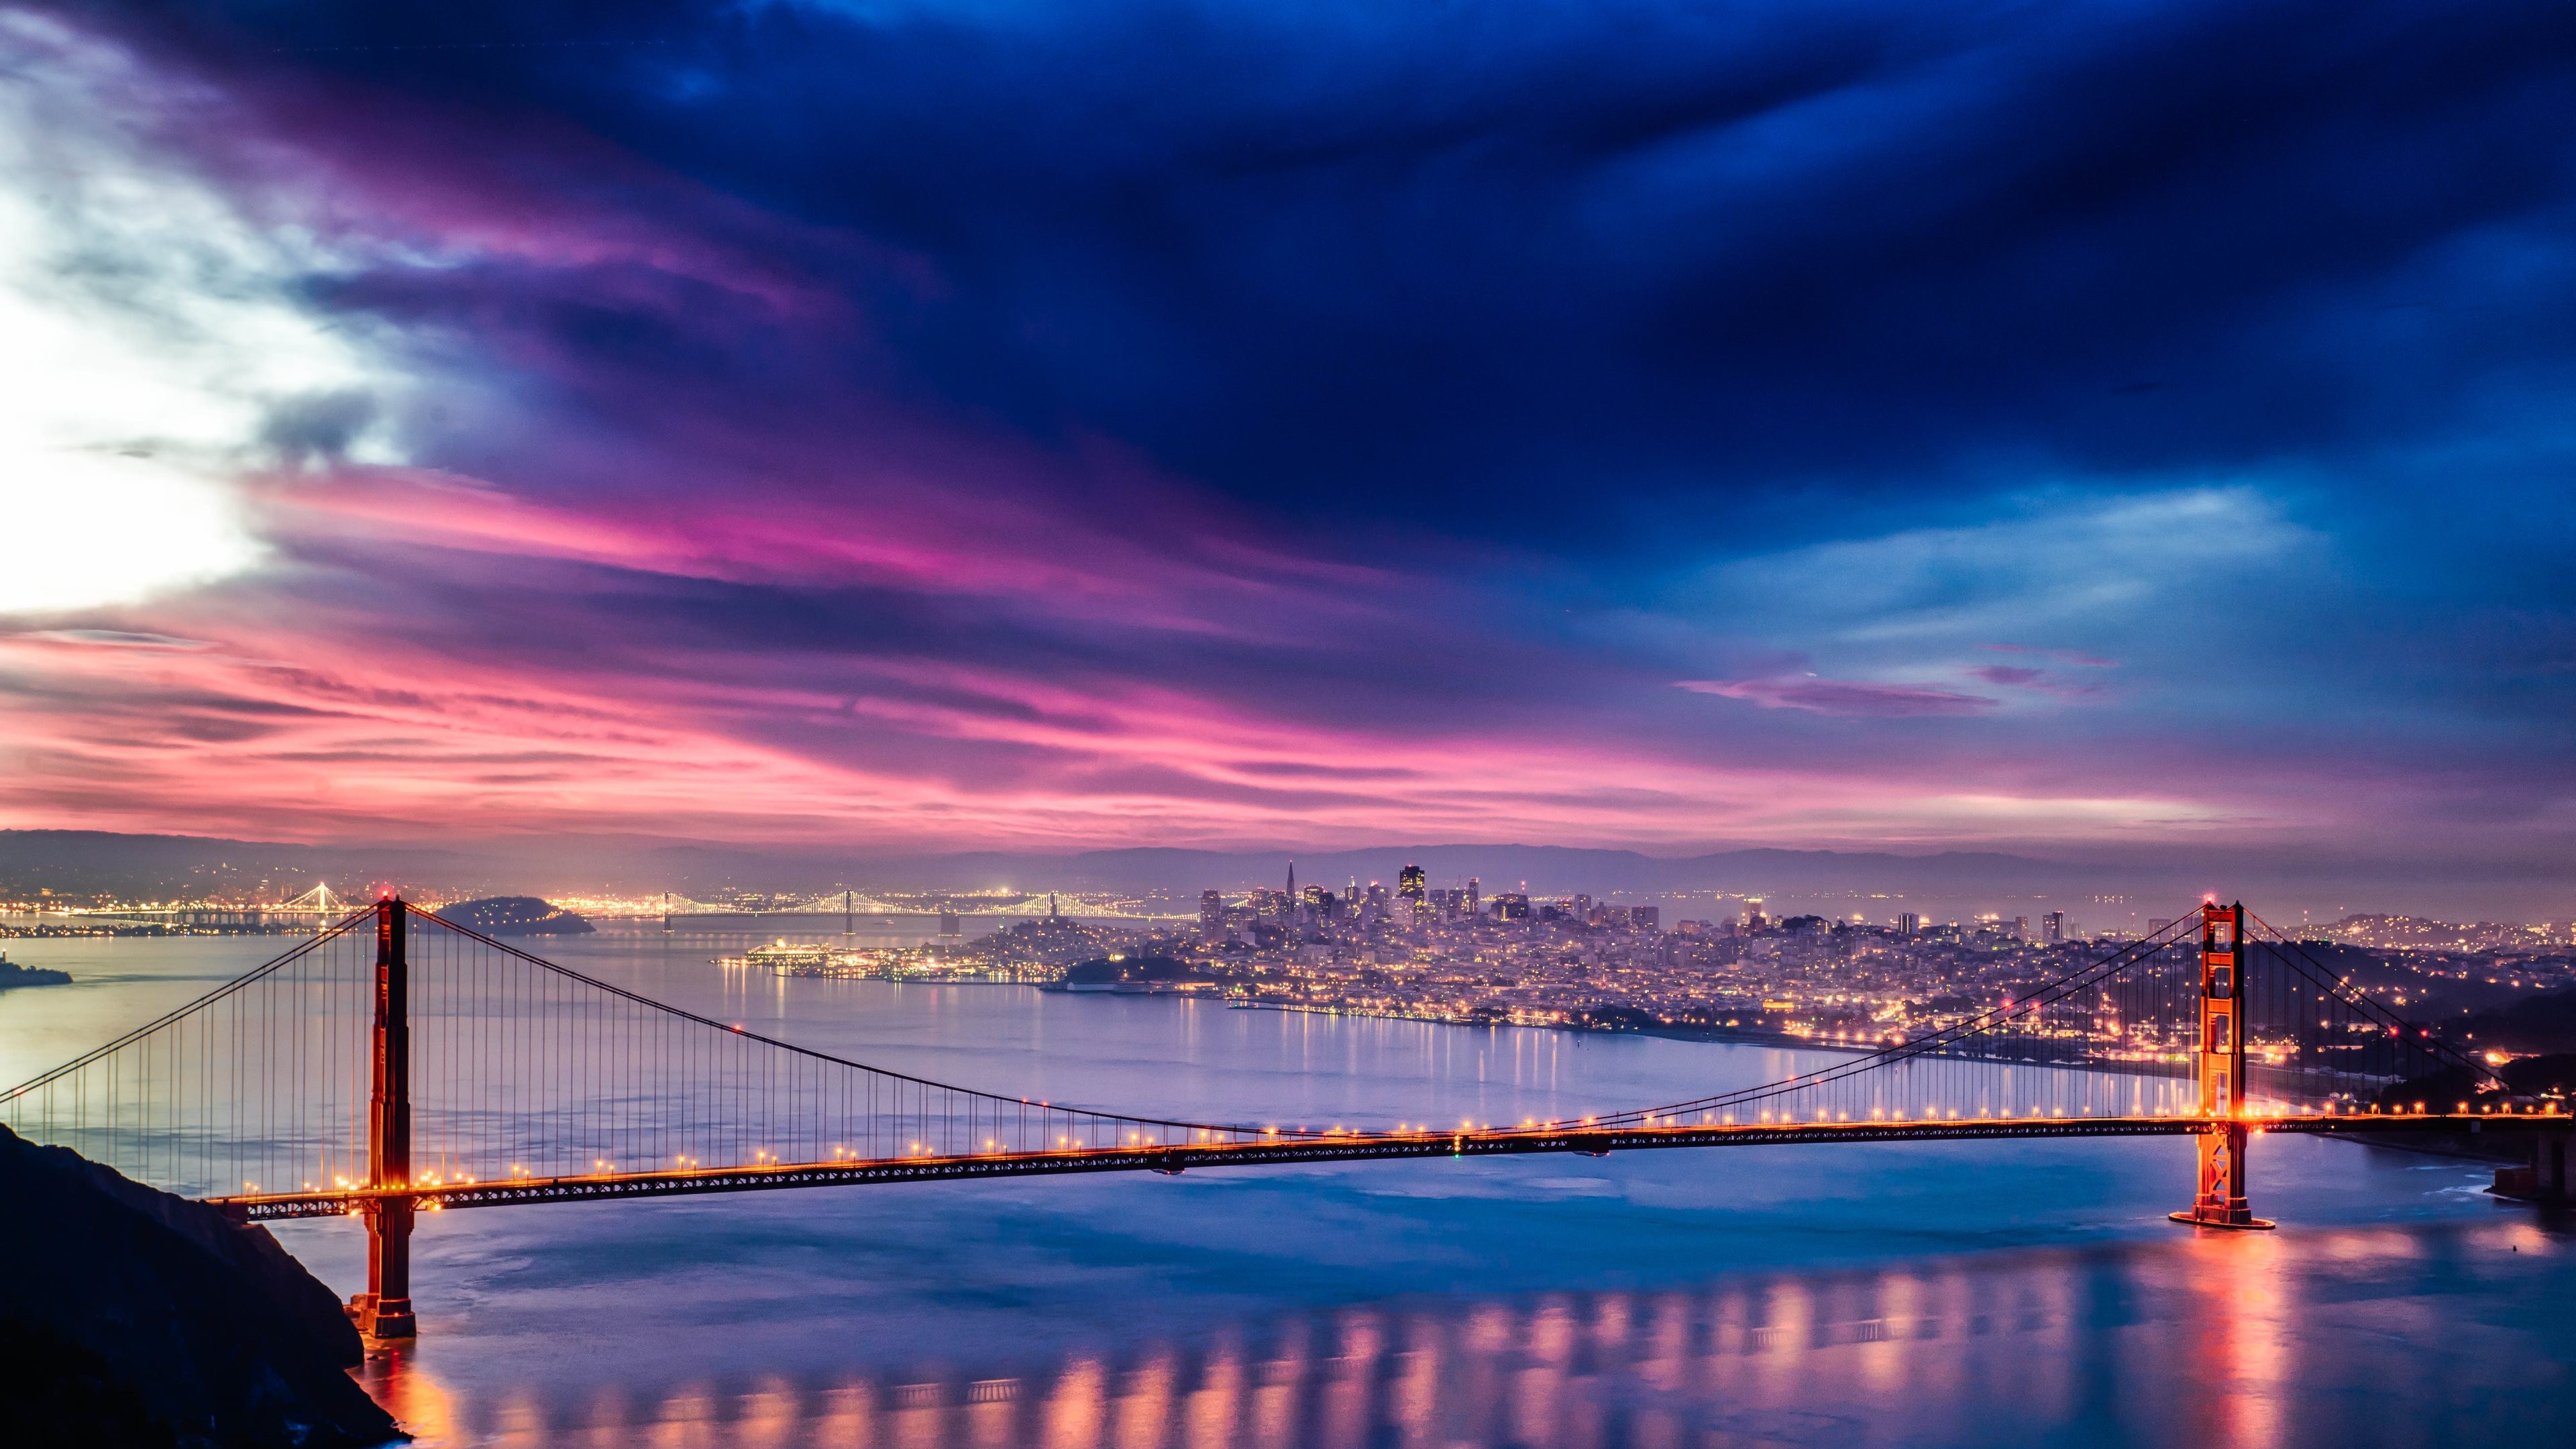 #landscape, #Golden Gate Bridge, #San Francisco, #urban